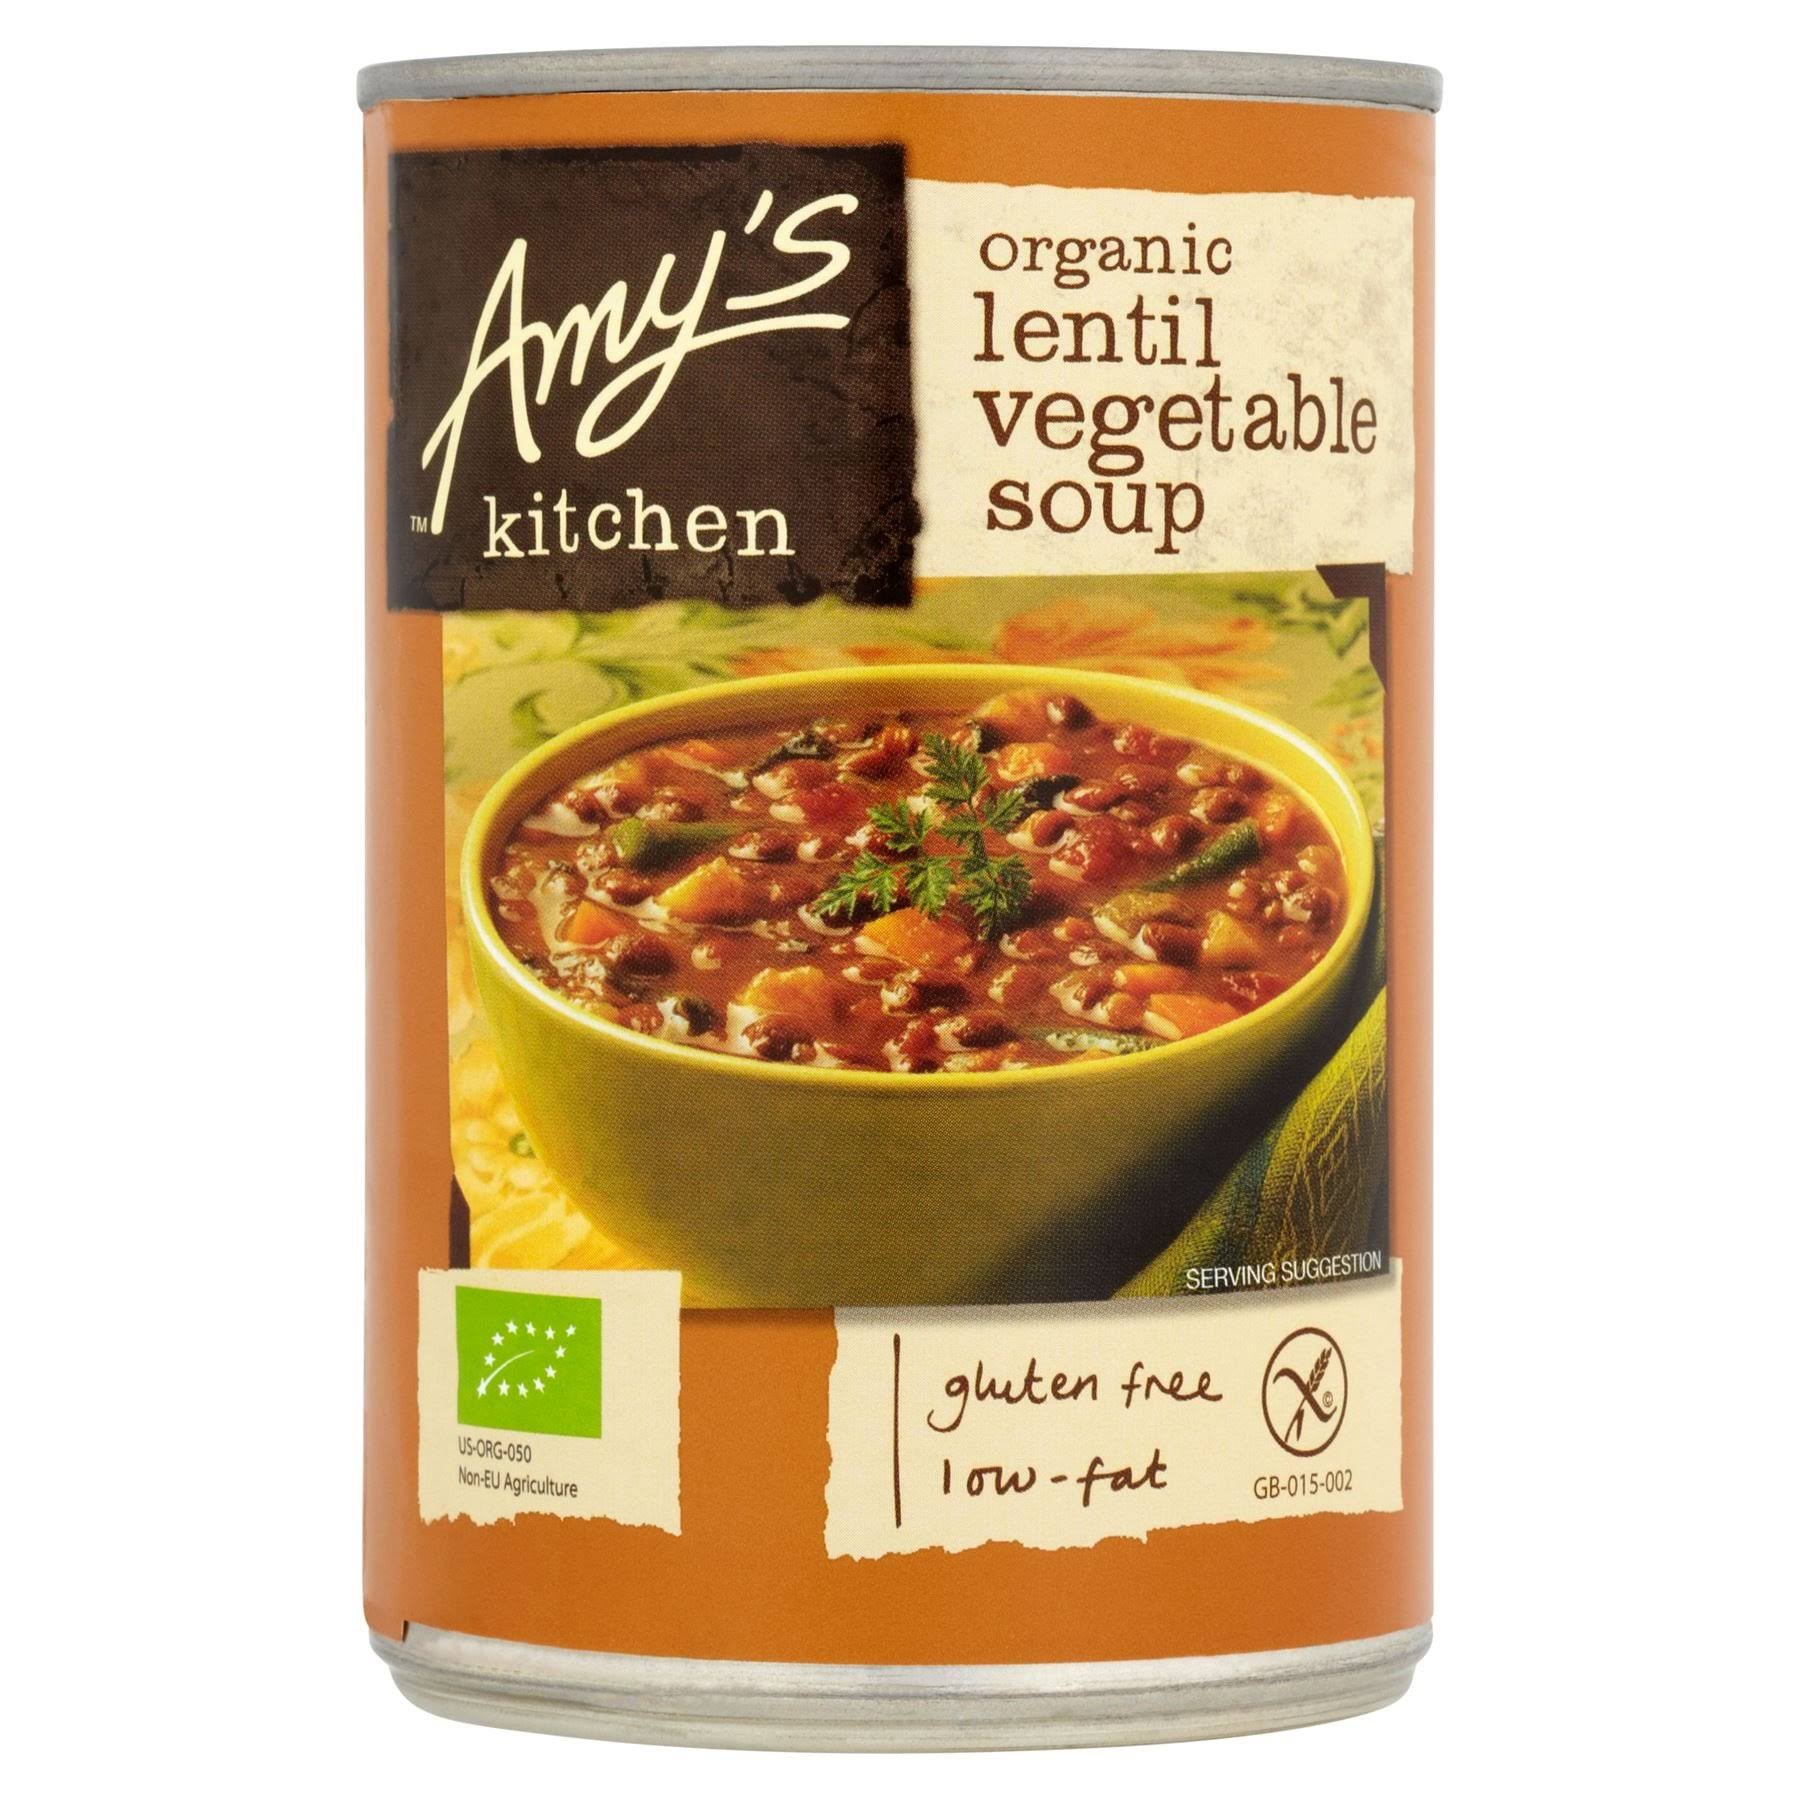 Amys - Organic Lentil Vegetable Soup 400g